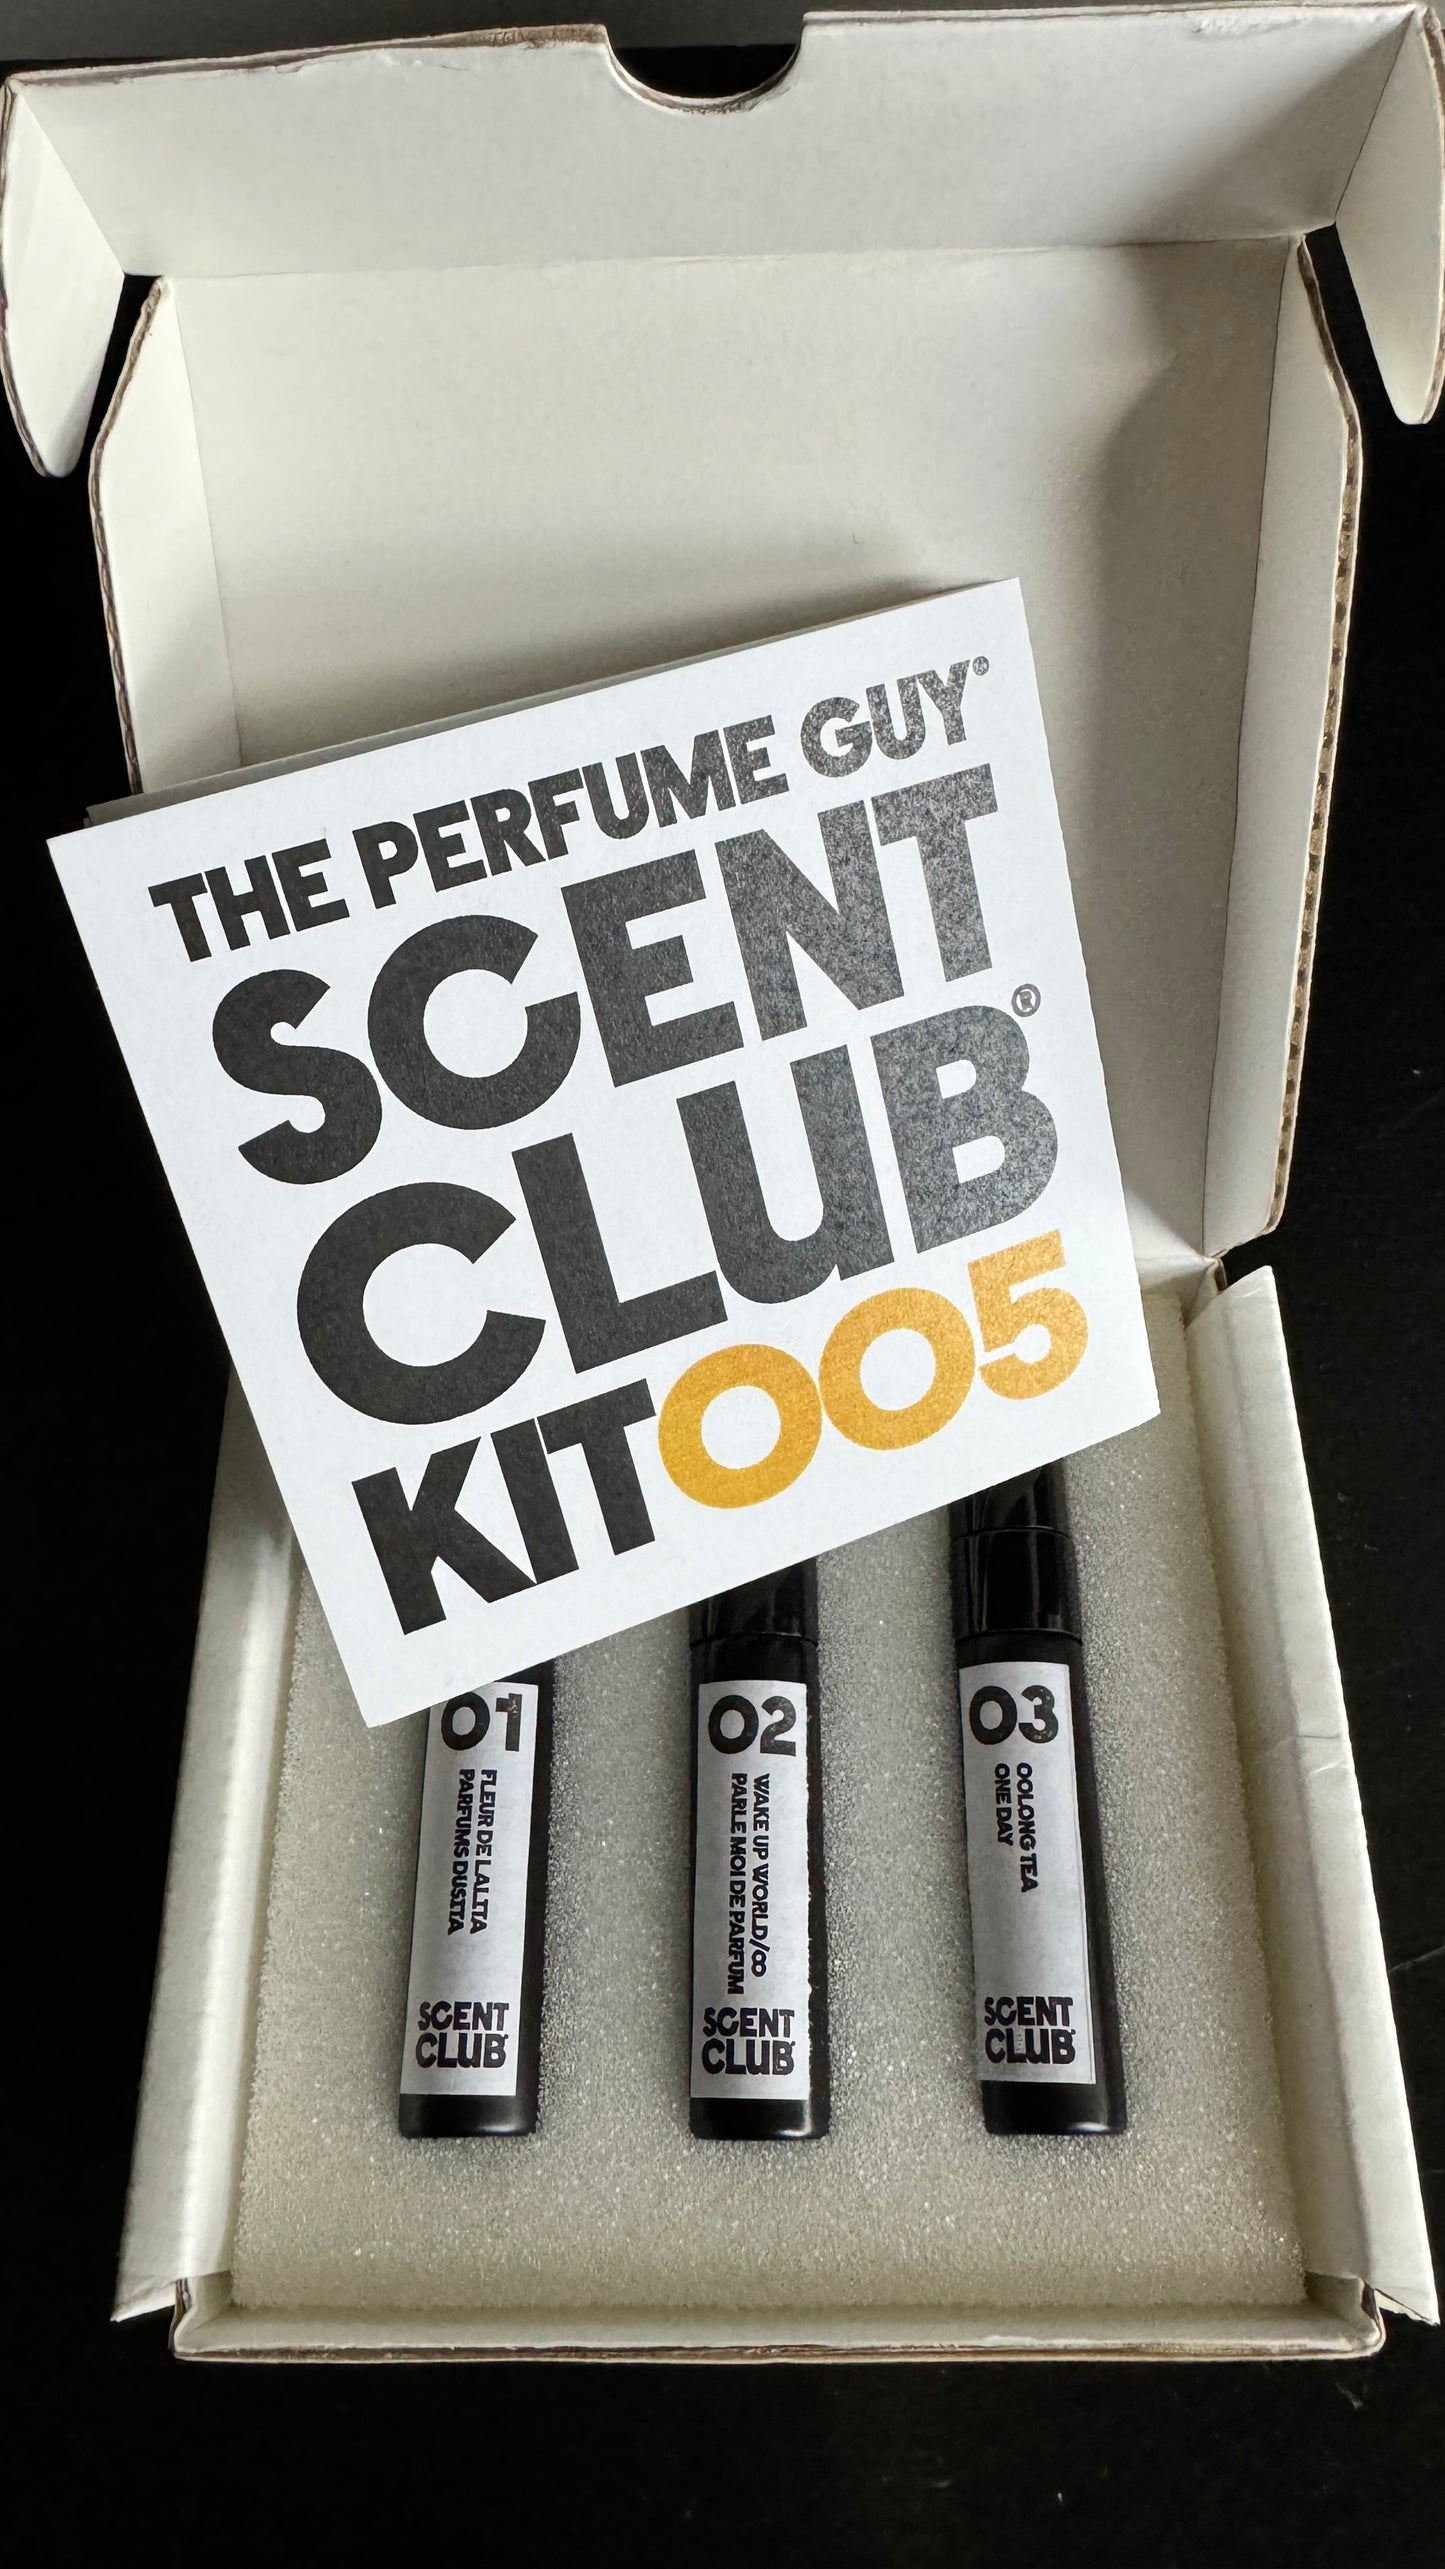 ScentClub Kit #005